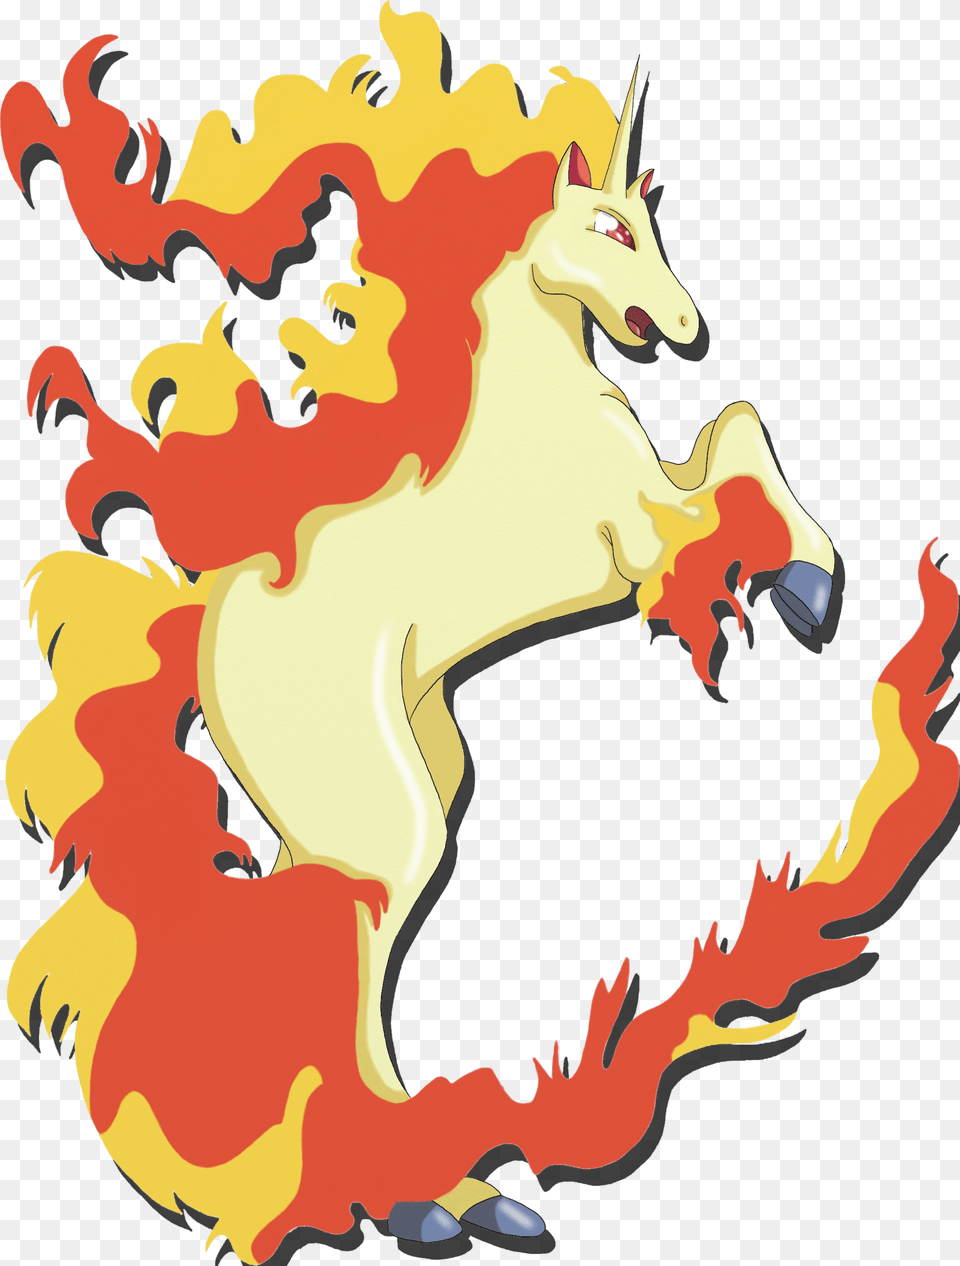 My Nickname For Rapidash Is Bob The Unicorn On Fire Rapidash Transparent, Animal, Mammal, Dinosaur, Reptile Png Image